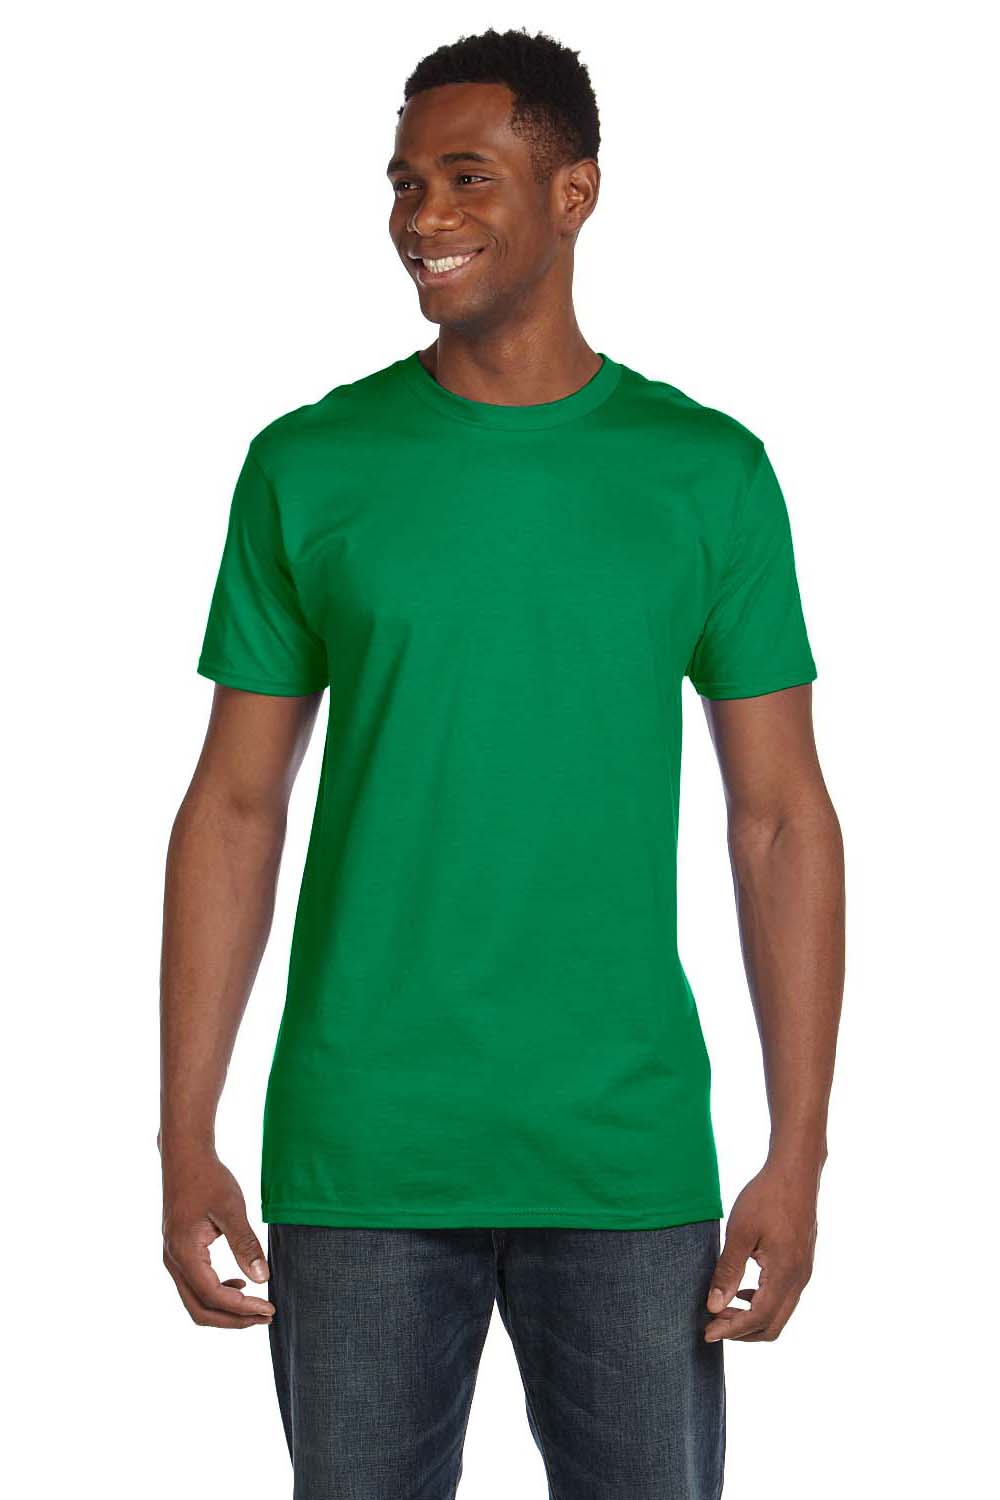 Hanes 4980 Mens Nano-T Short Sleeve Crewneck T-Shirt Kelly Green Front